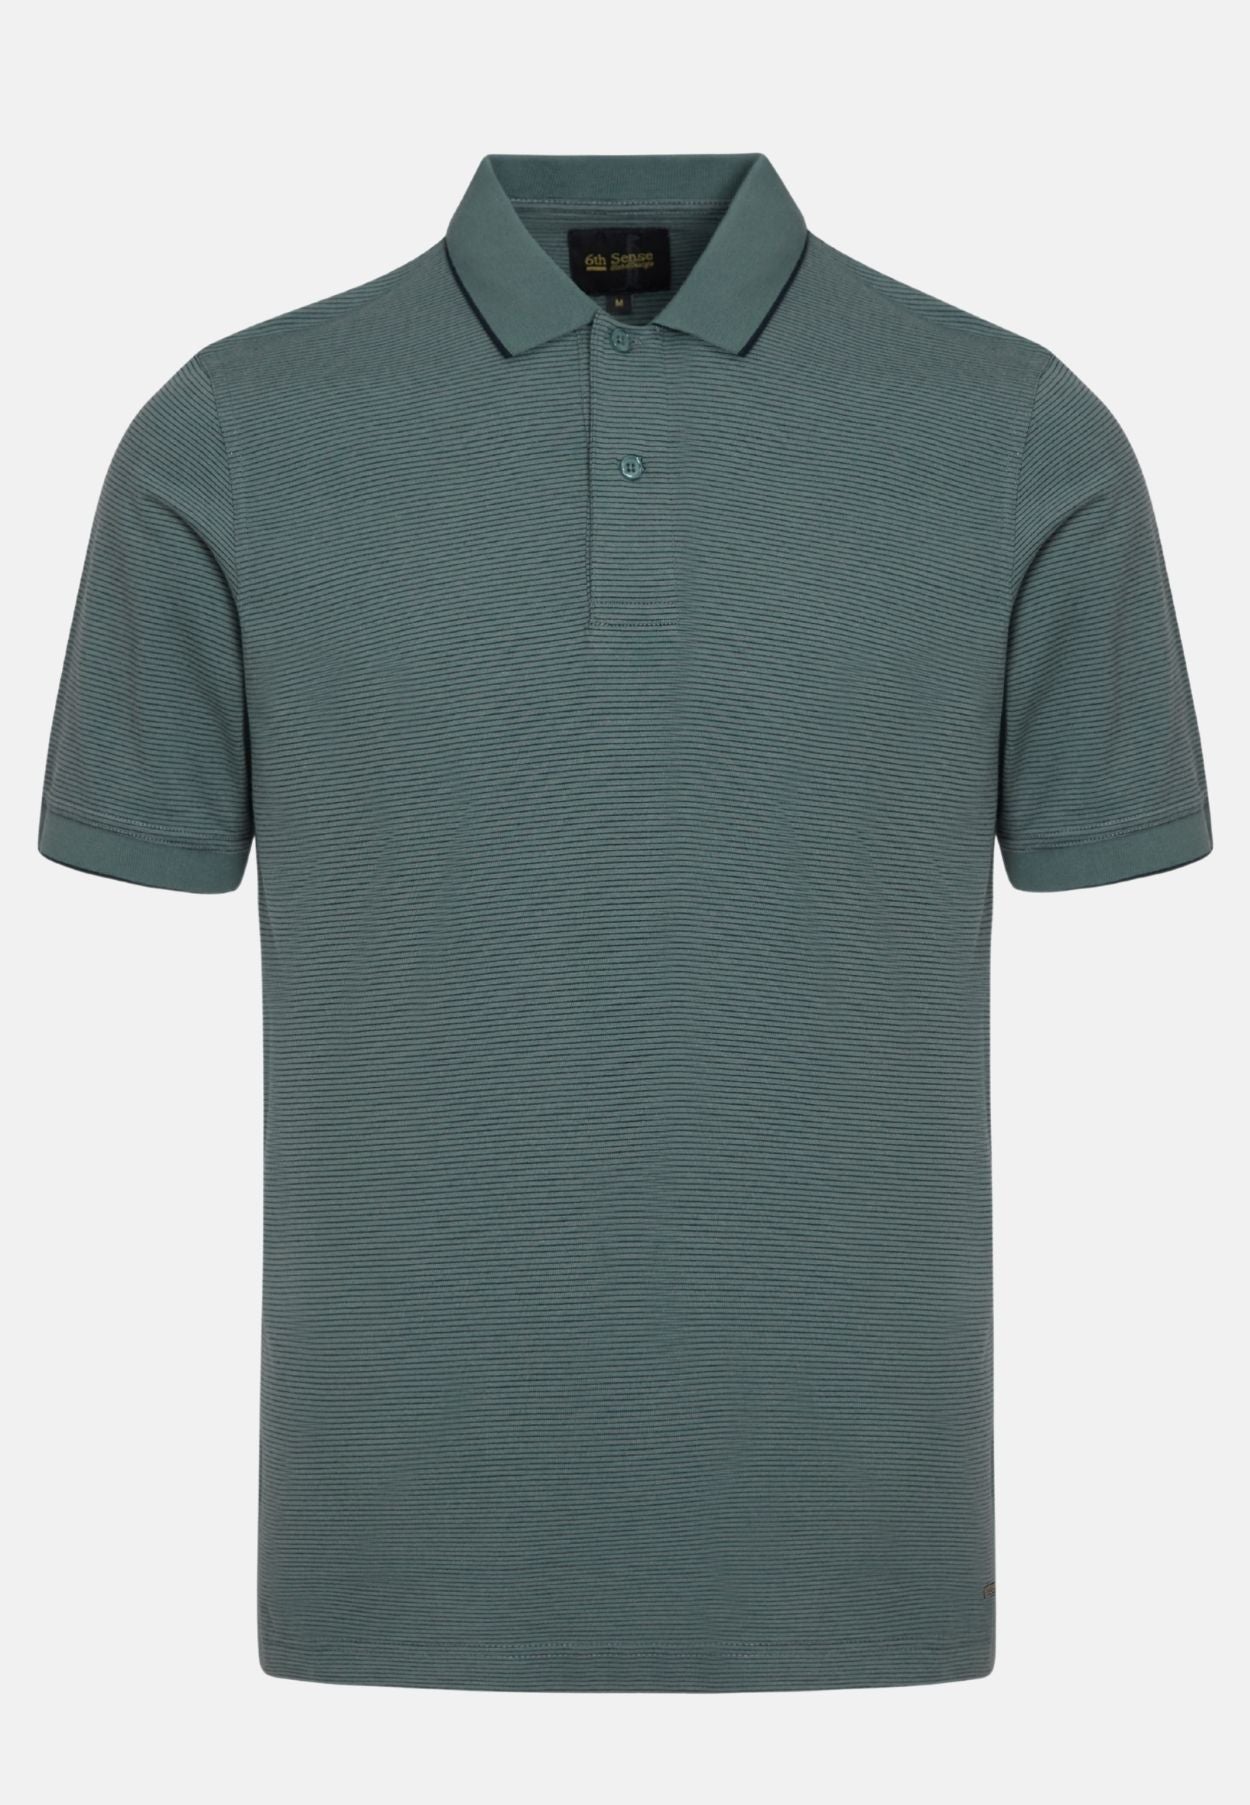 Men's Sailor Balsam Green Polo Shirt-Front View